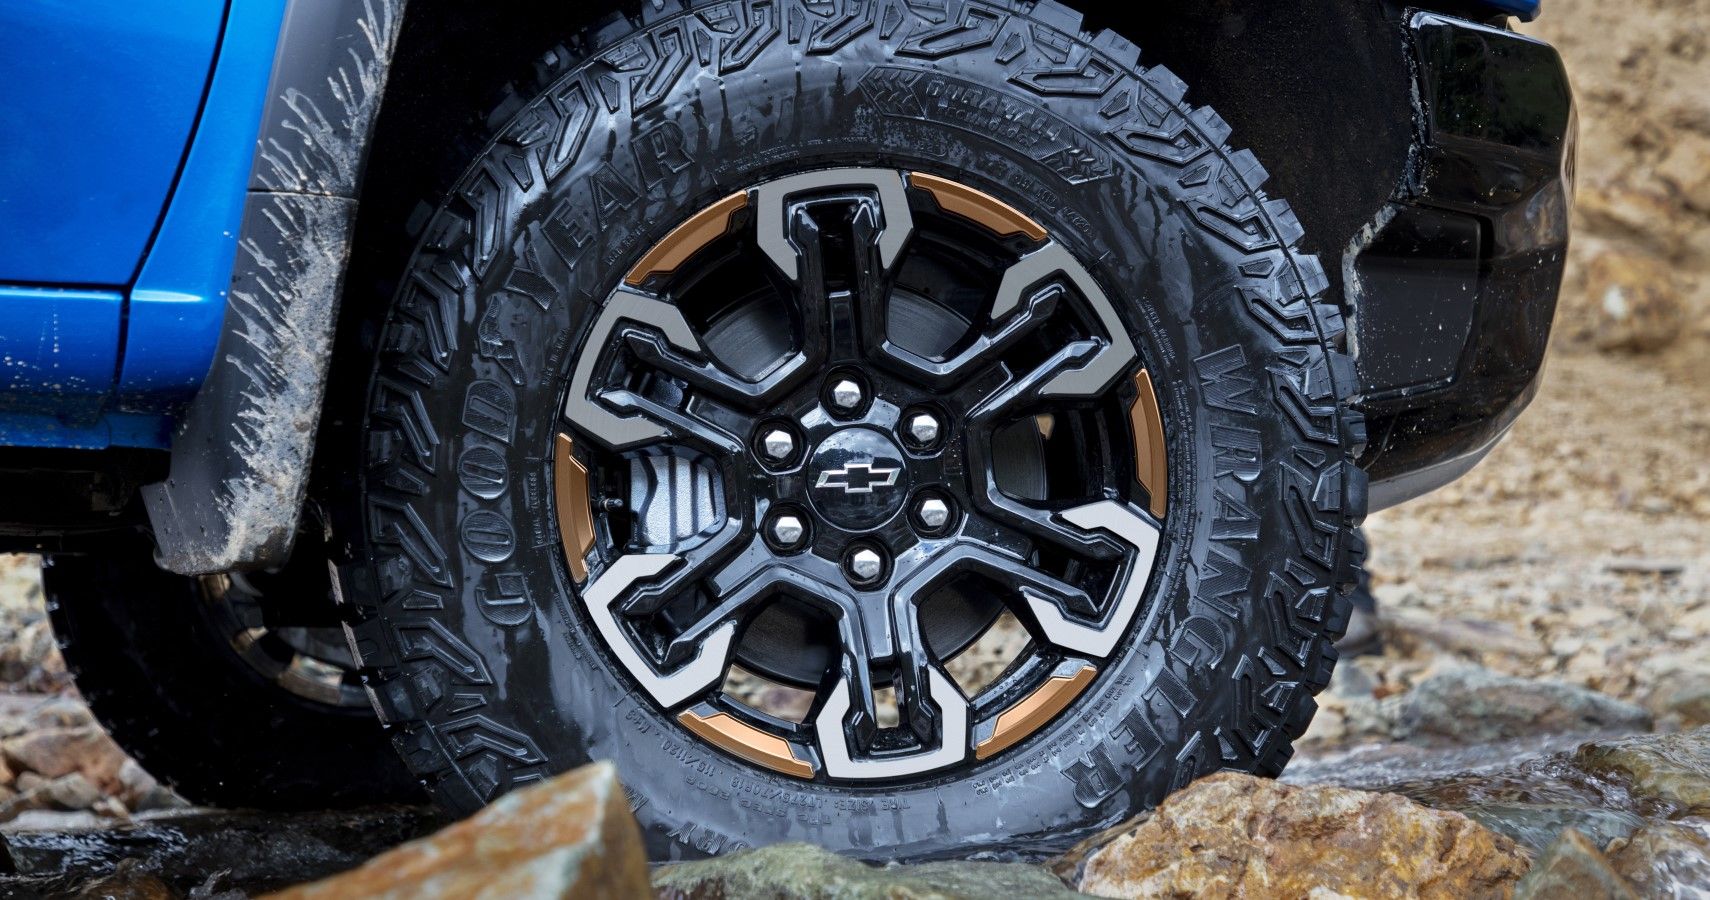 2022 Chevrolet Silverado off-road-ready 33-inch tires close-up view